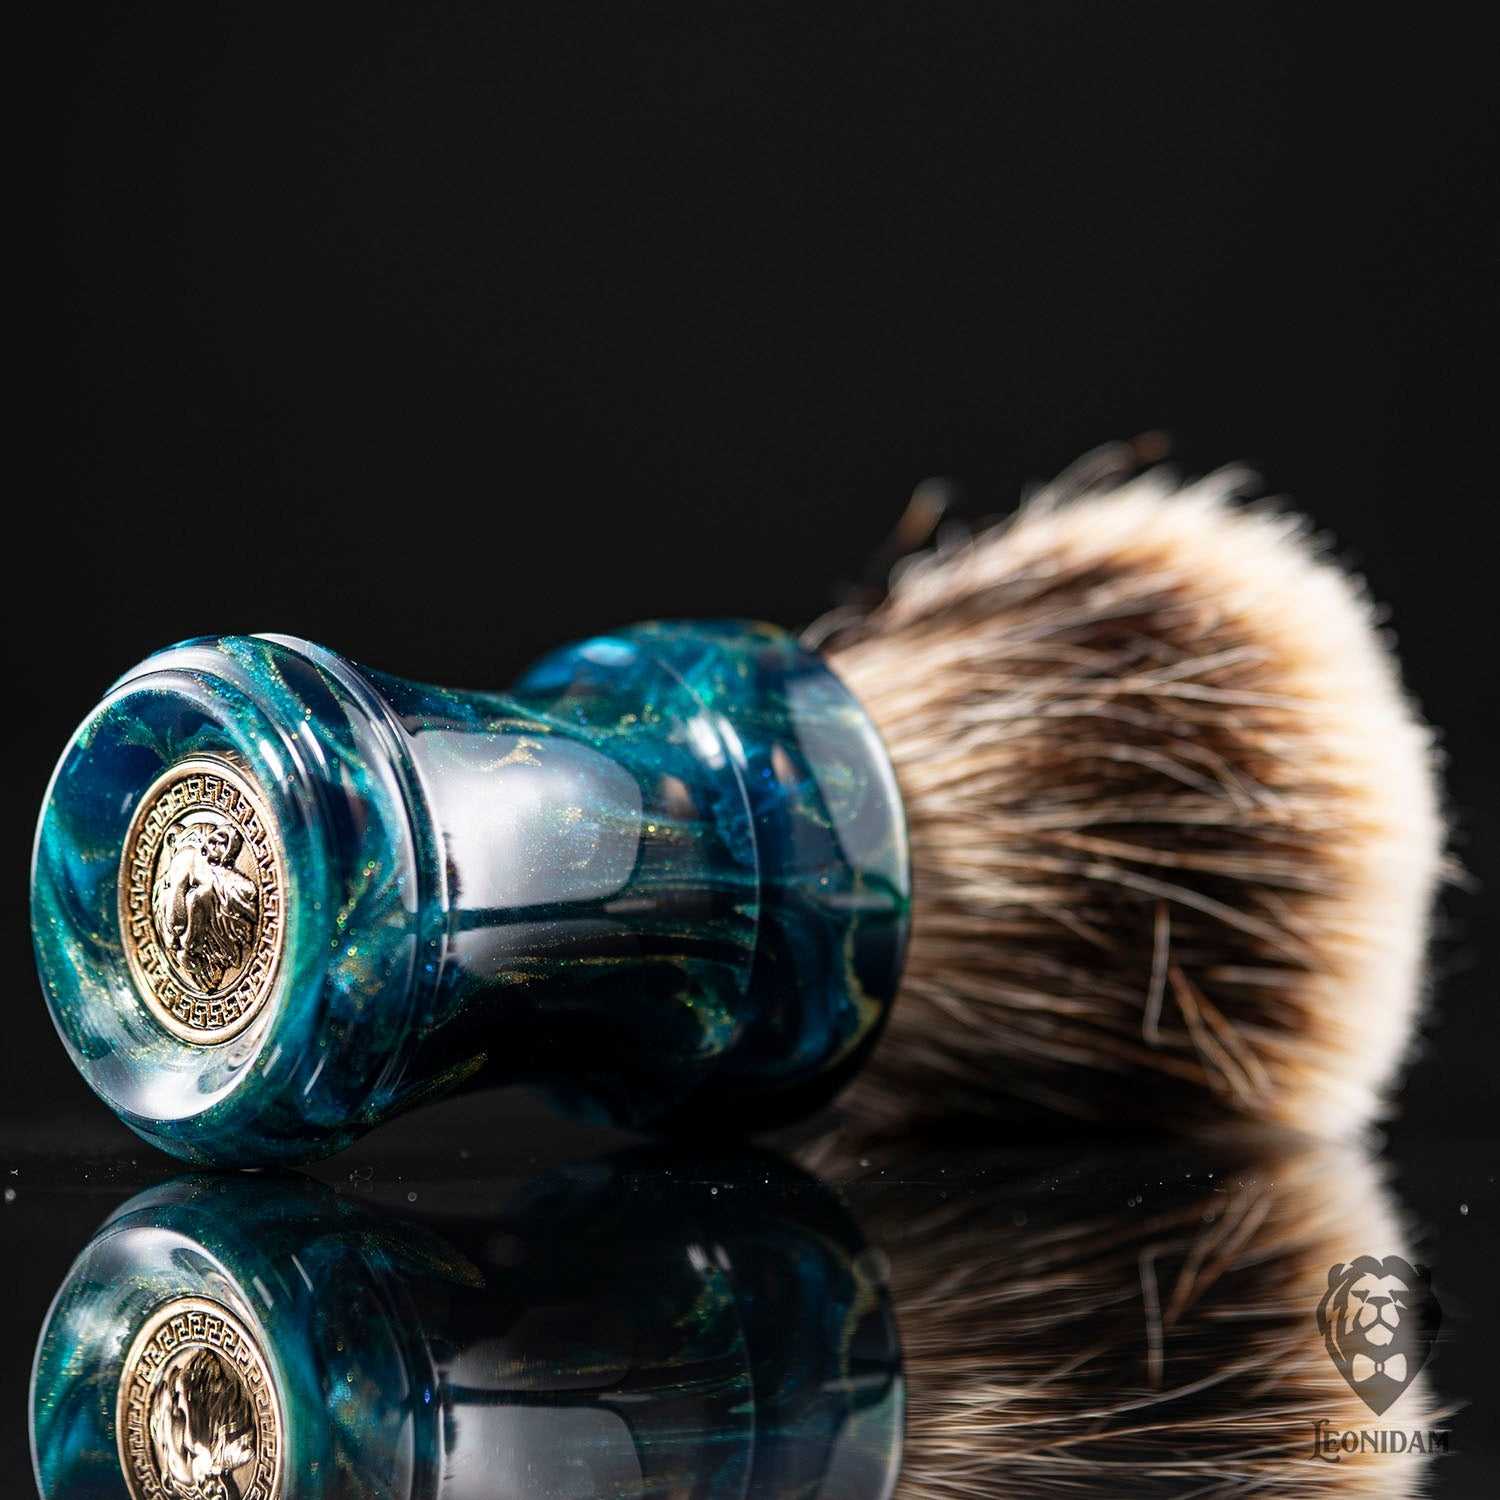 Handmade Shaving Brush "Skyfall" in polished deep blue and gold resin